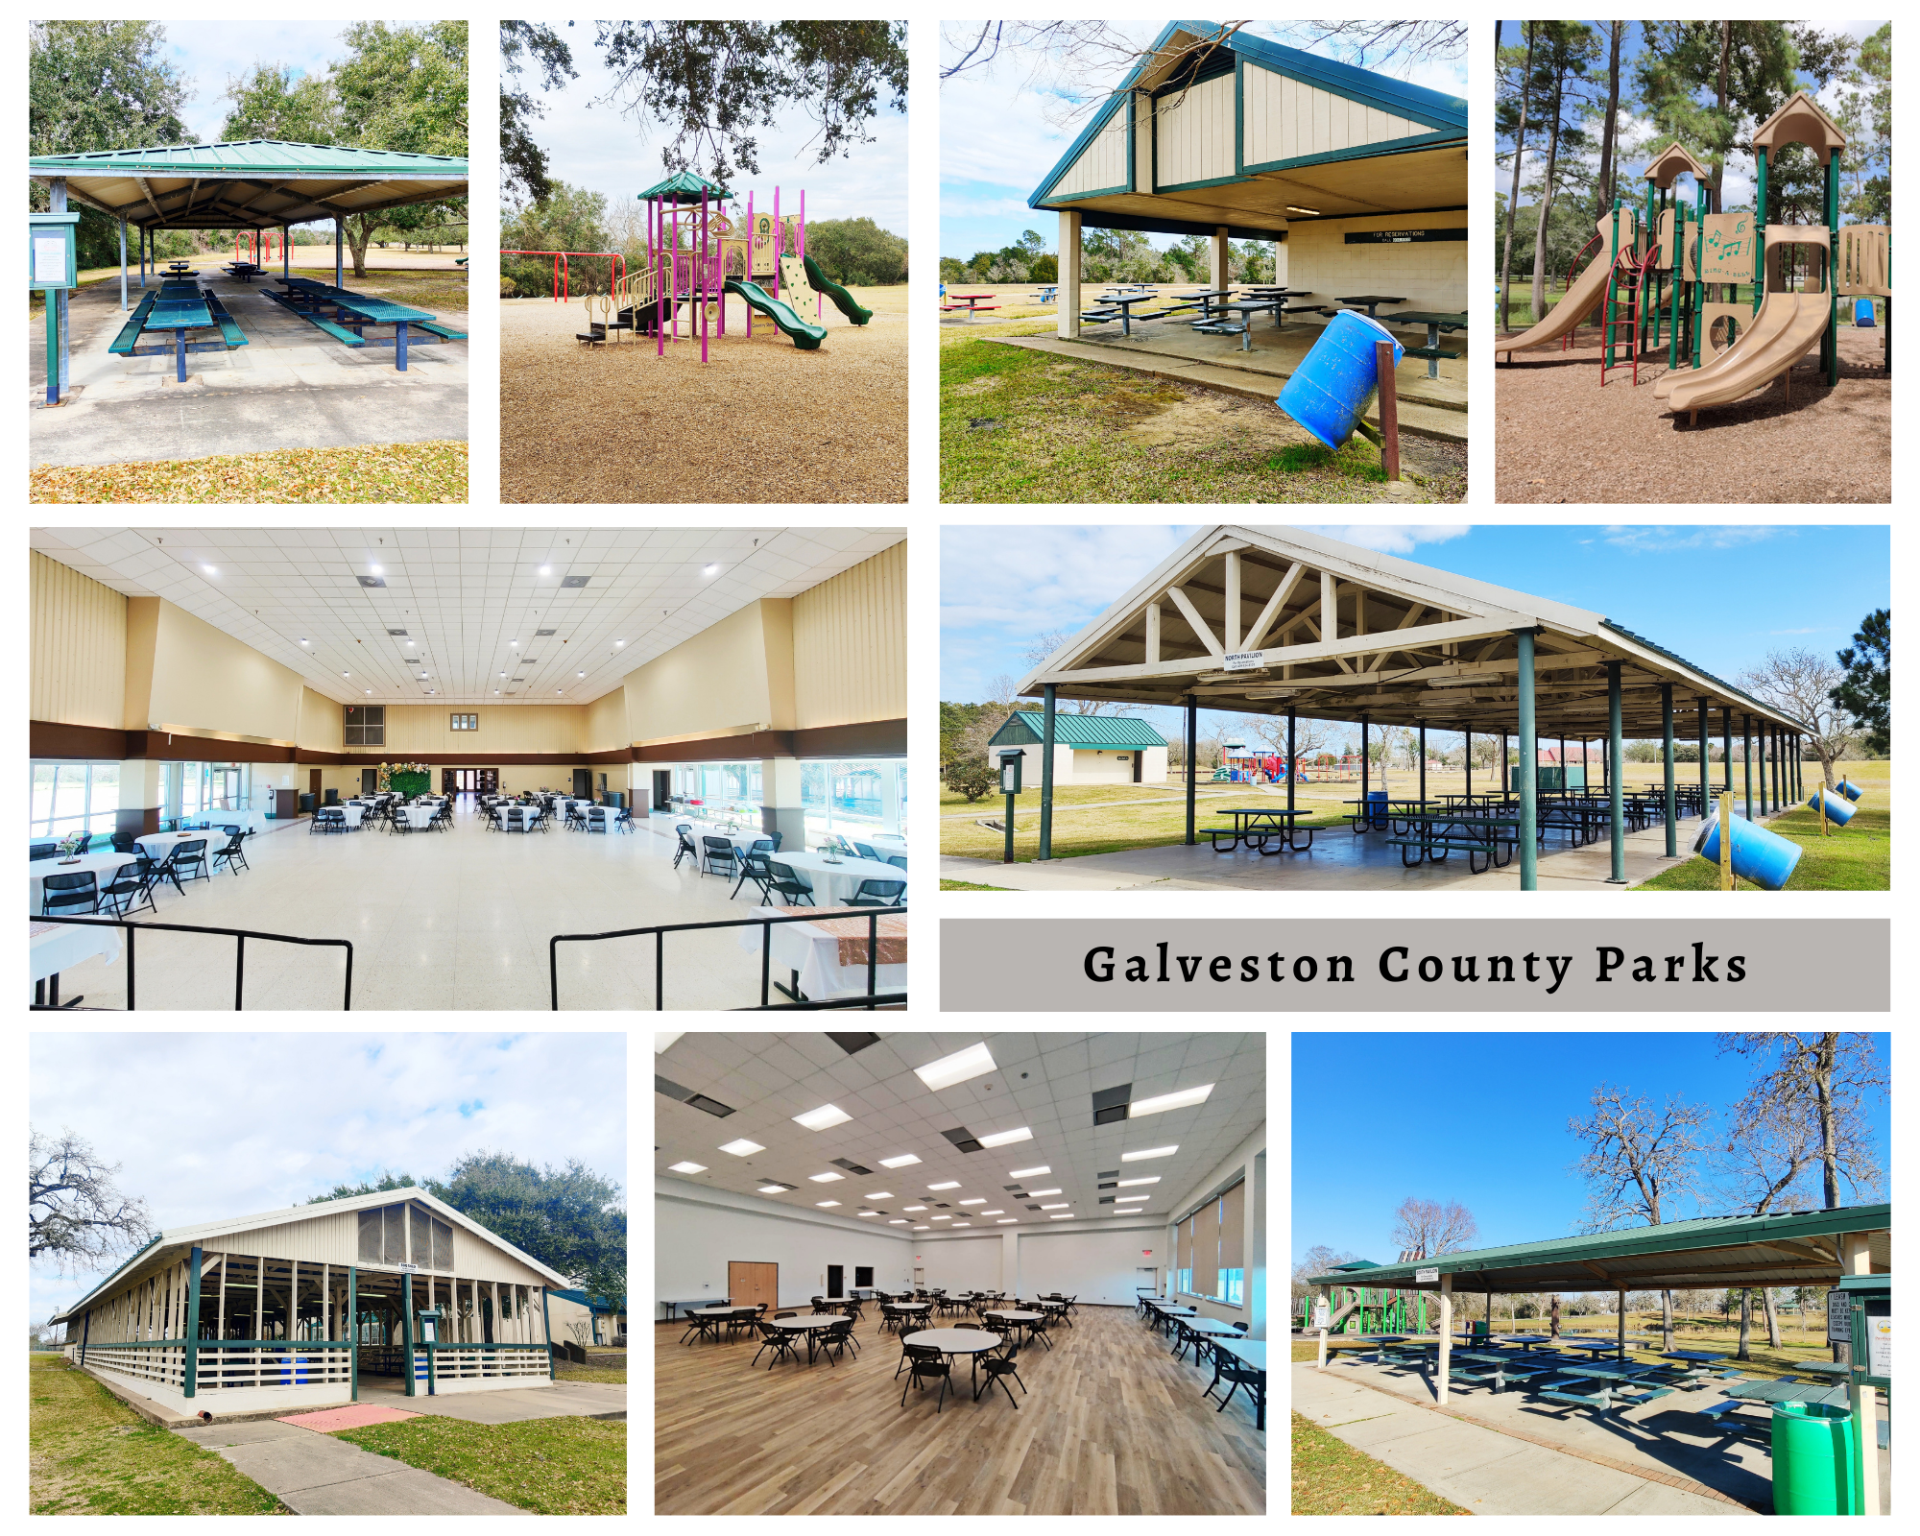 Galveston County Parks